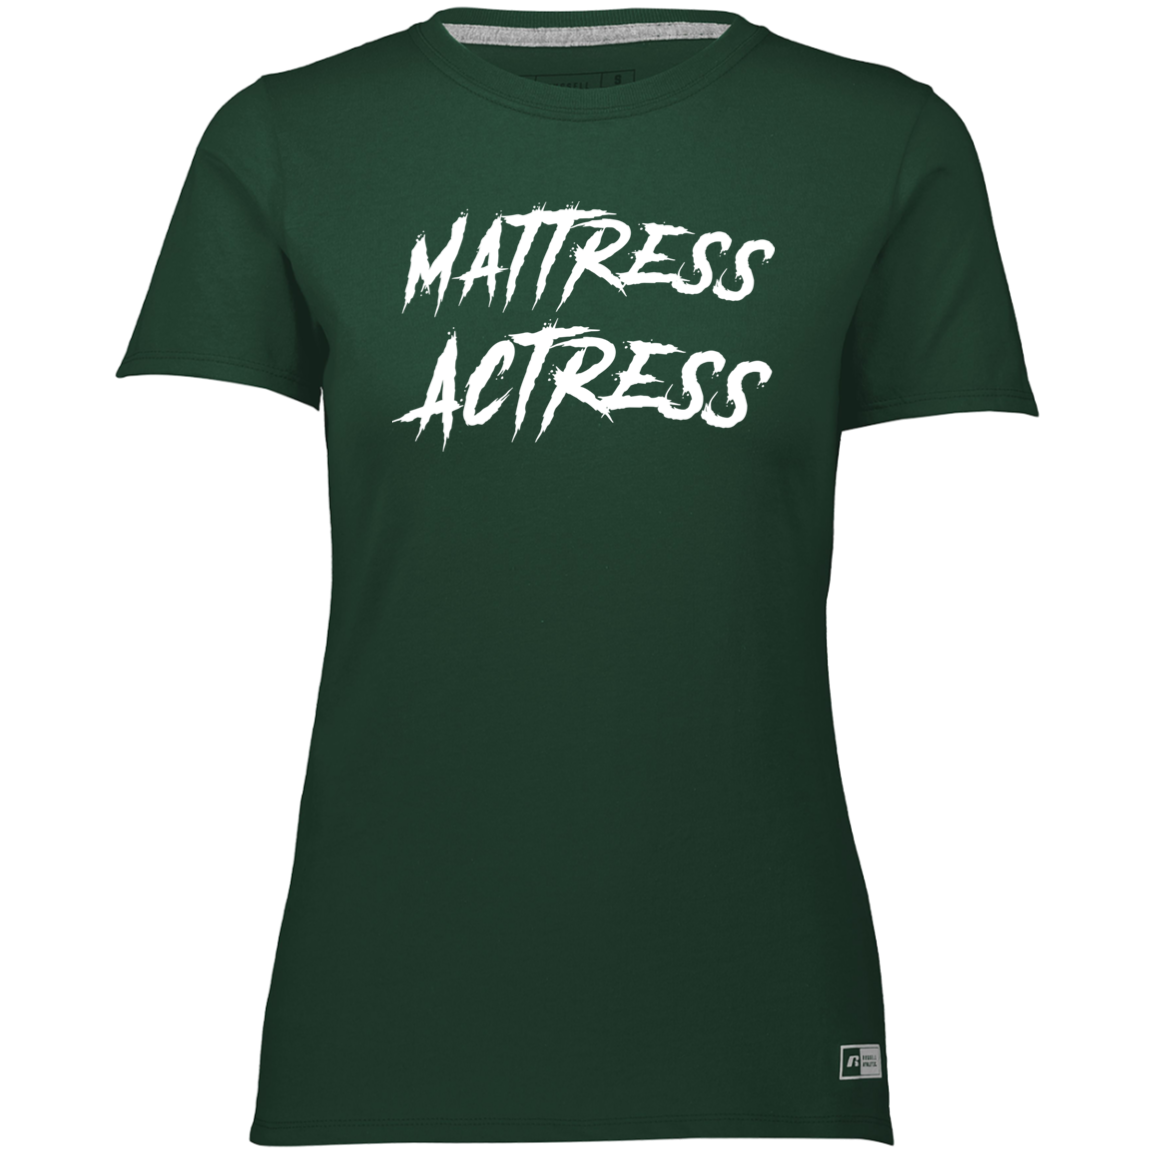 "Mattress Actress" Ladies’ Essential Dri-Power Tee